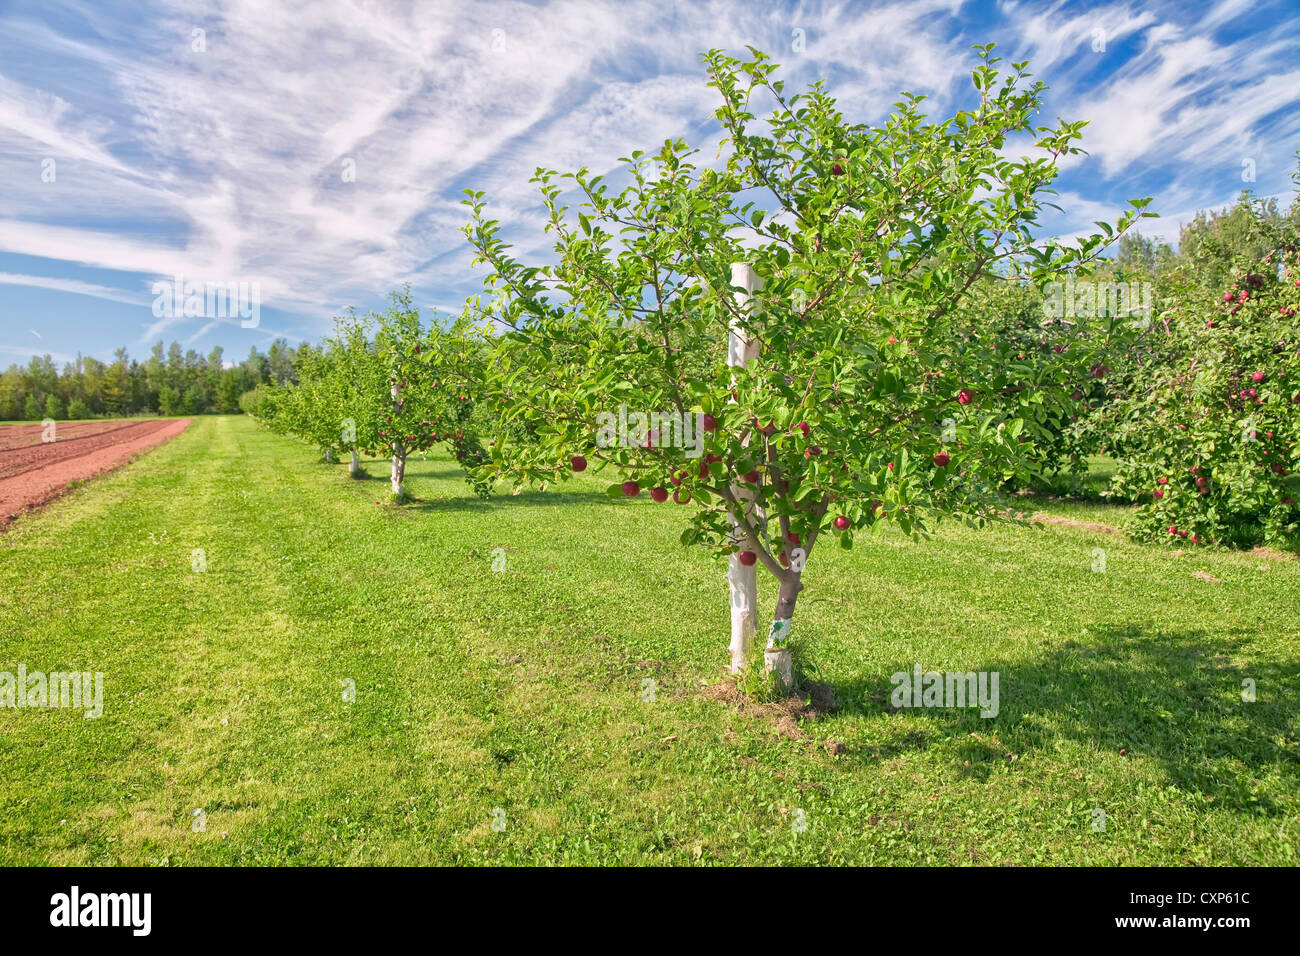 https://c8.alamy.com/comp/CXP61C/honeycrisp-apple-trees-in-a-farm-orchard-CXP61C.jpg